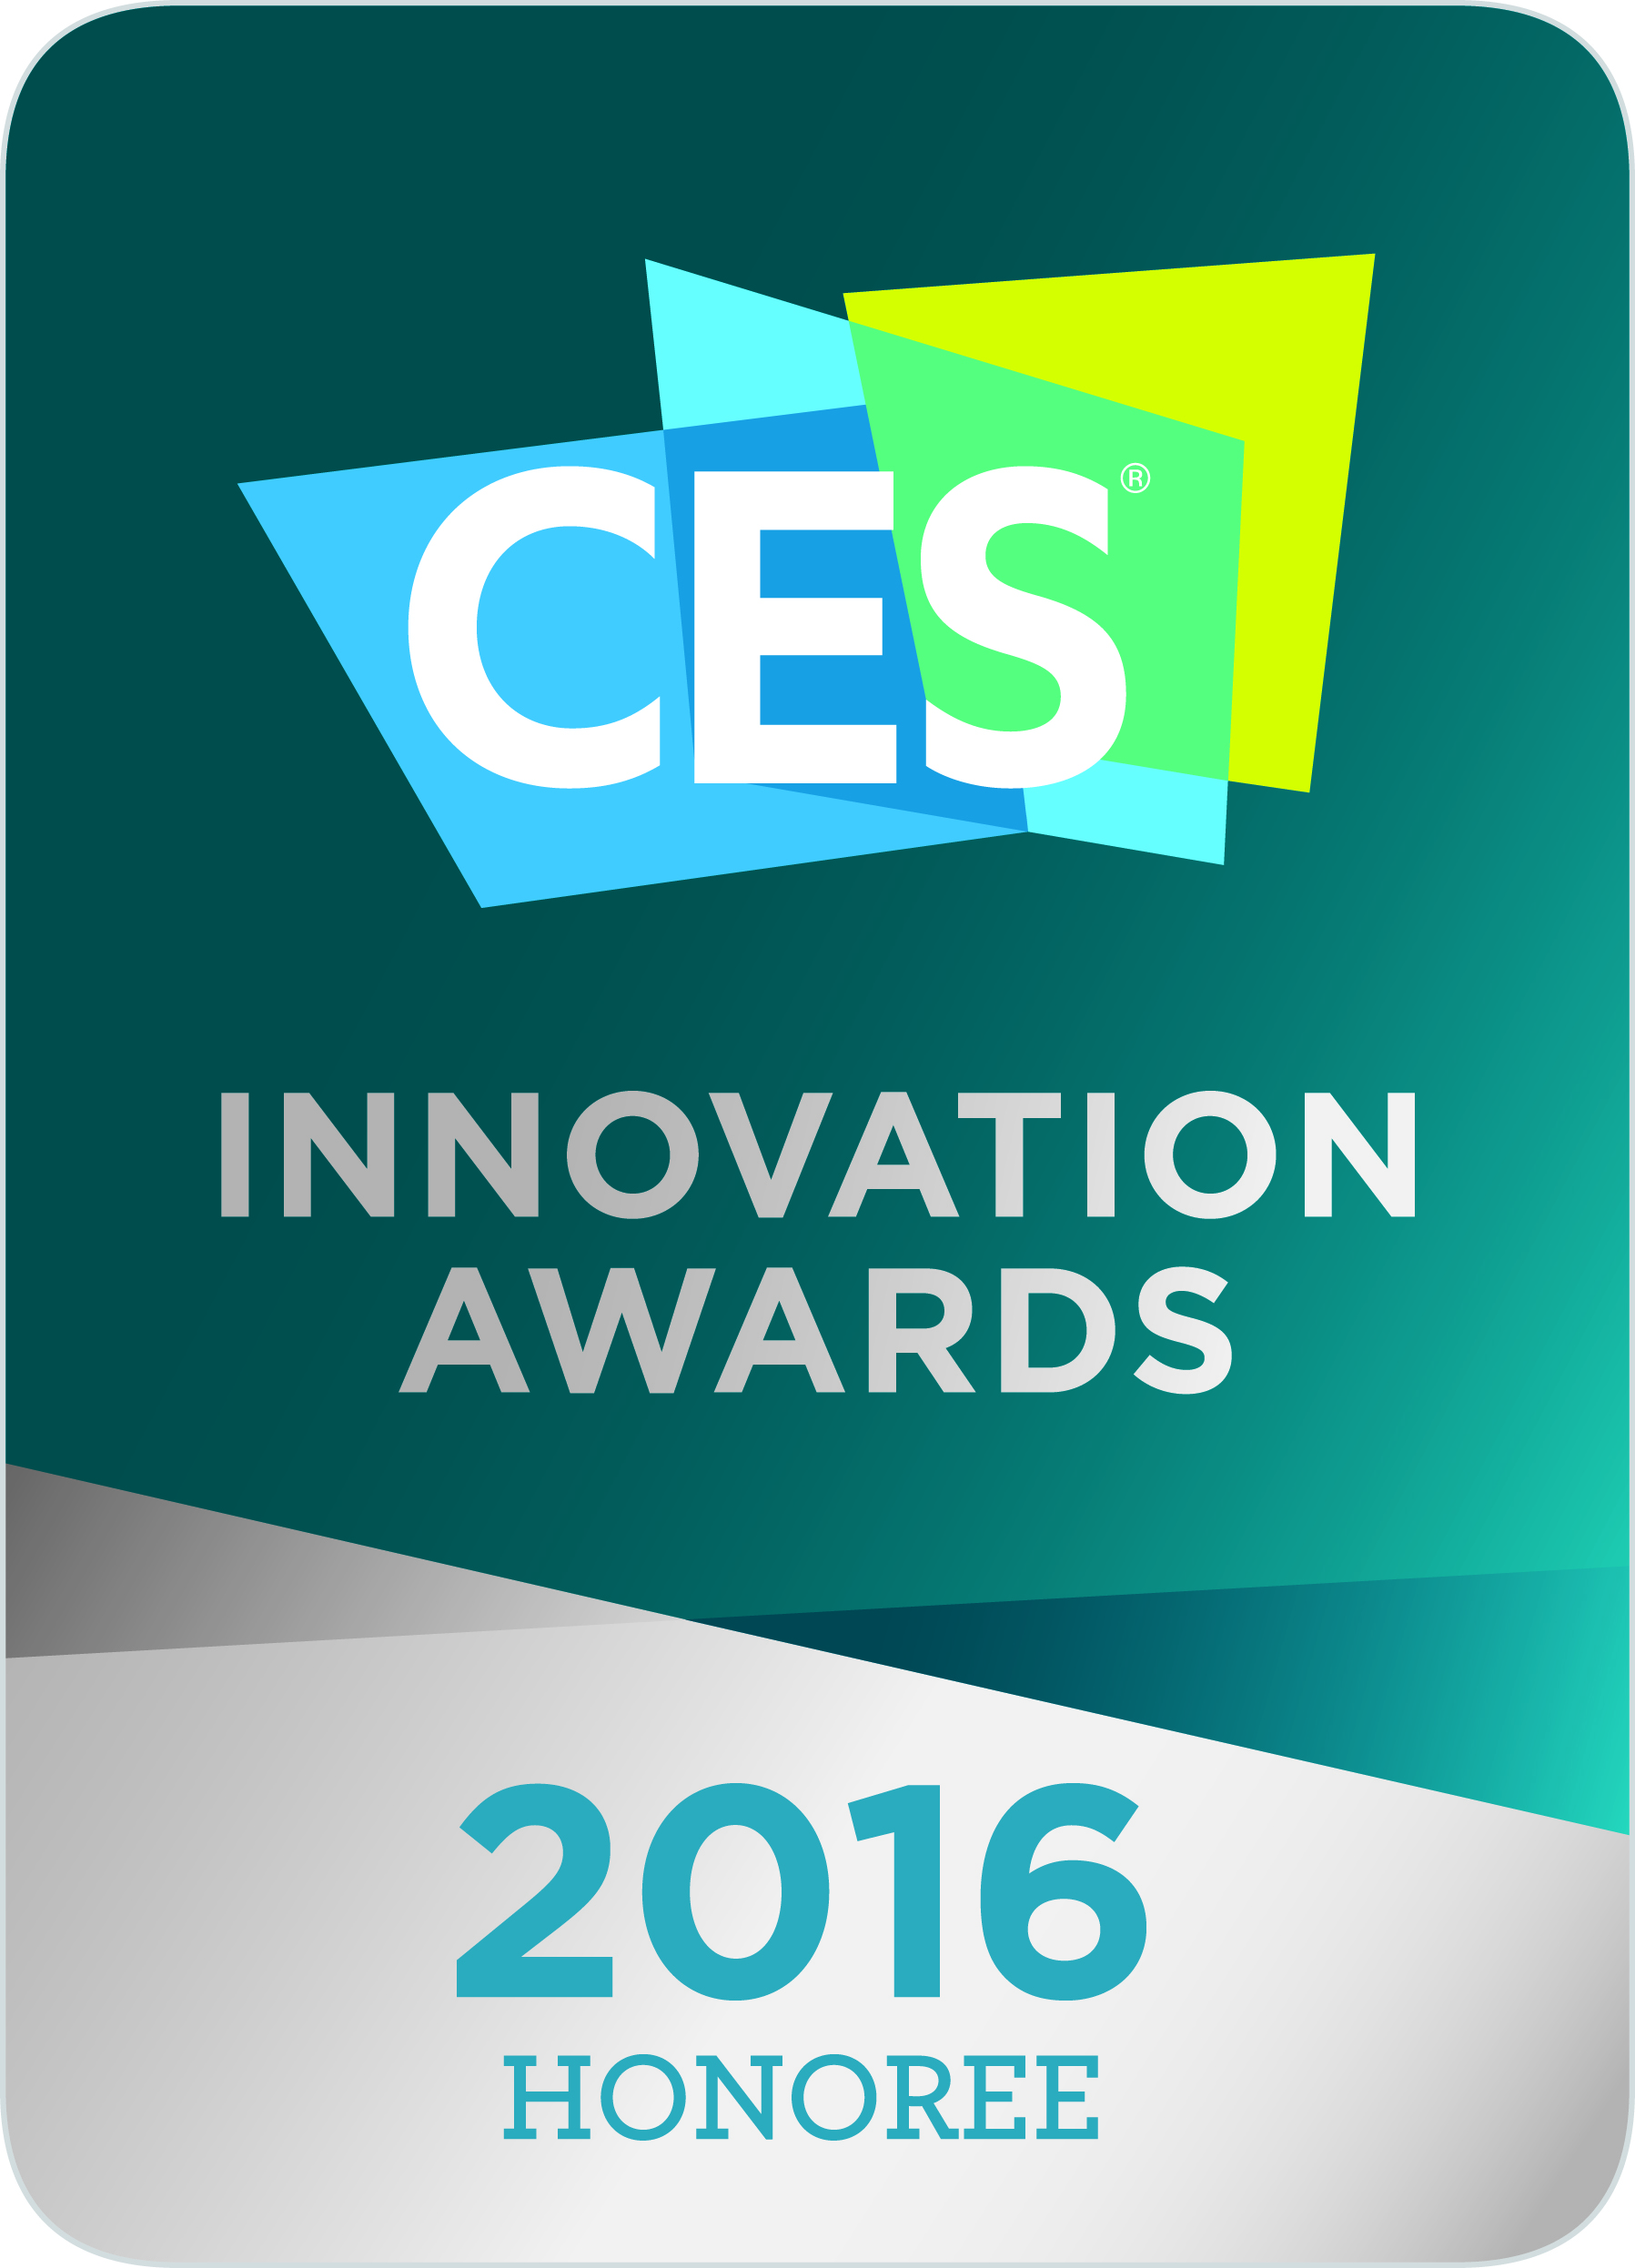 2016 CES Innovation Award Honoree